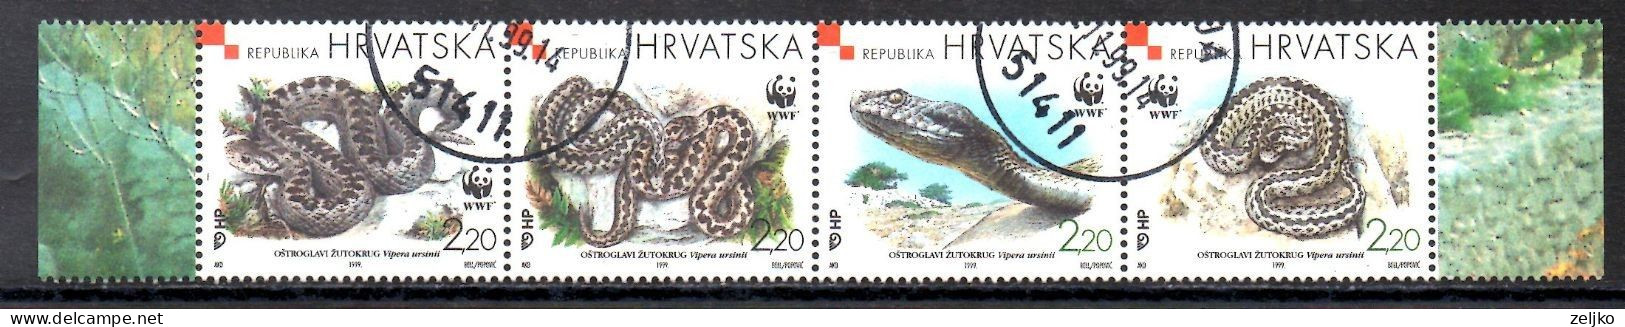 Croatia 1999, Used, Michel 500 - 503, Strip Of 4, Fauna, Snake - Croatie